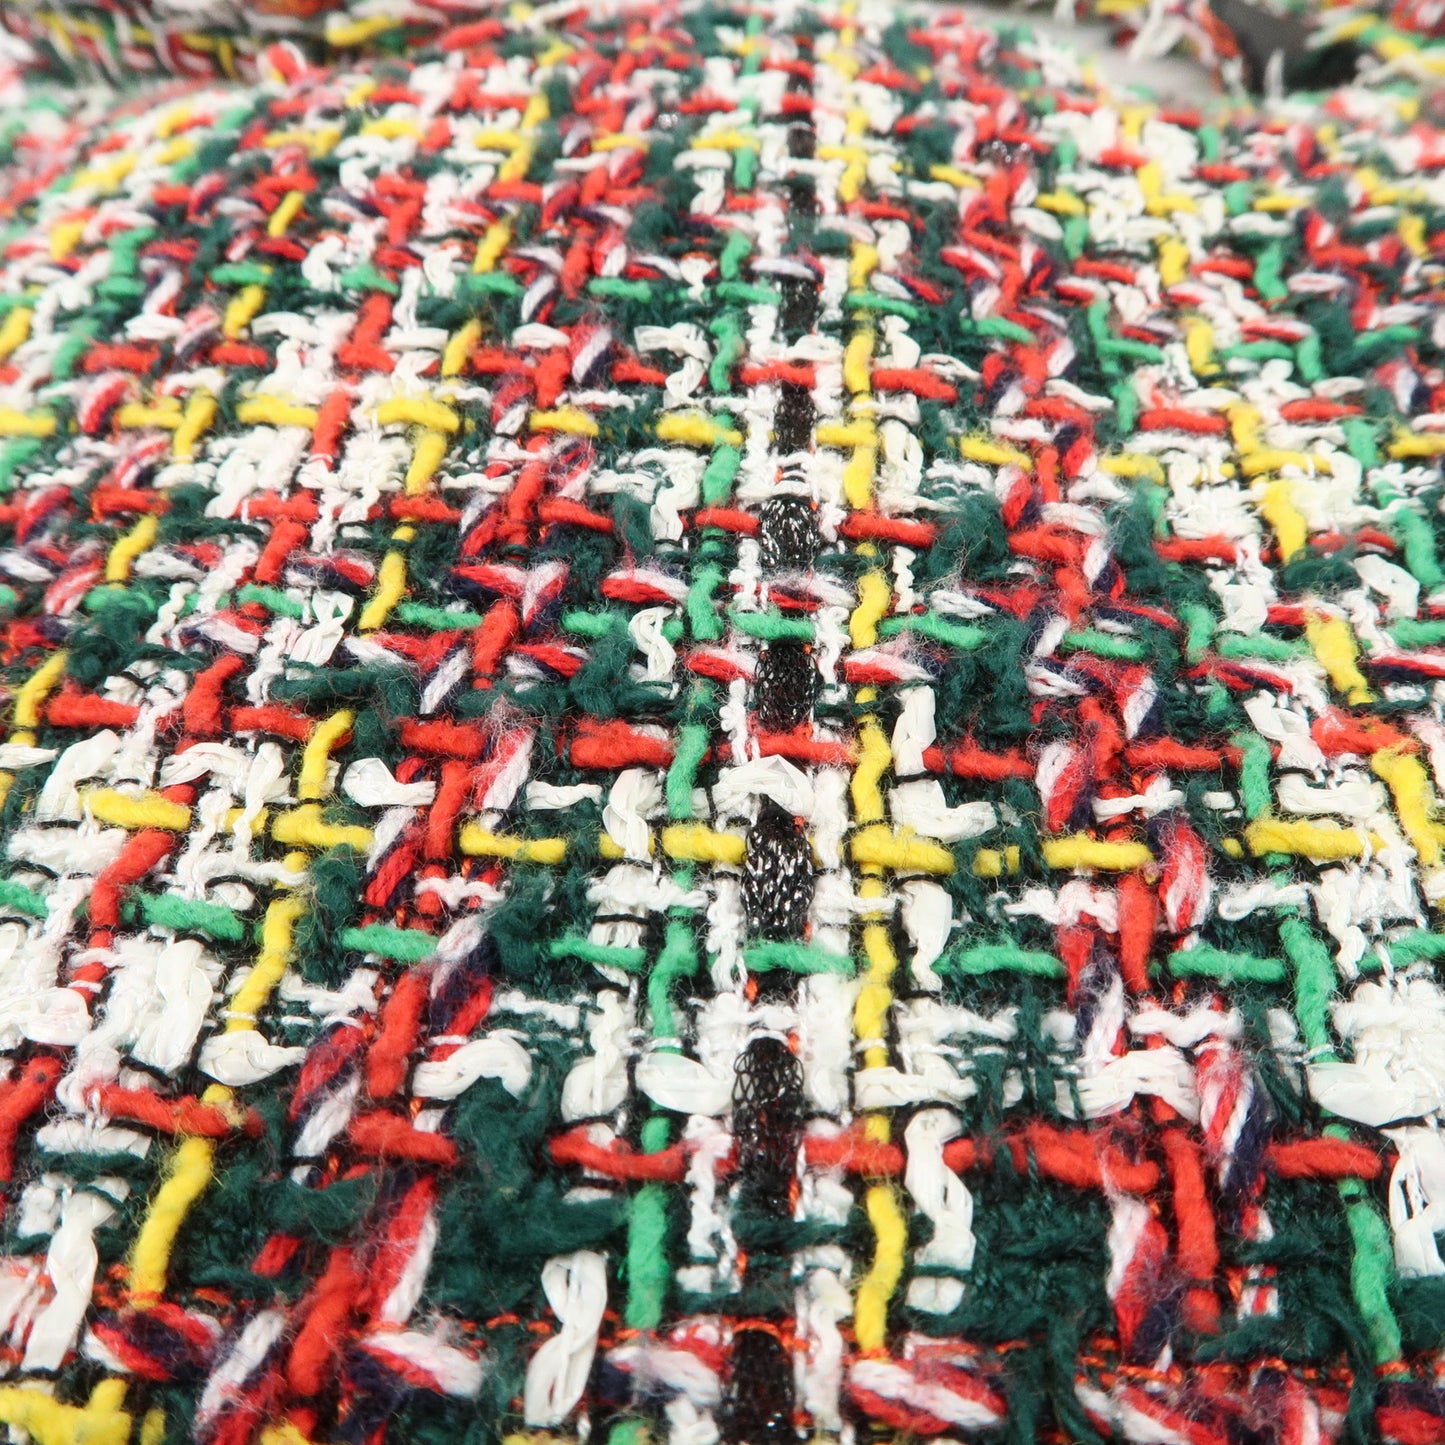 CHANEL Tweed Leather Rubber No5 Tote Bag Multicolor A91557